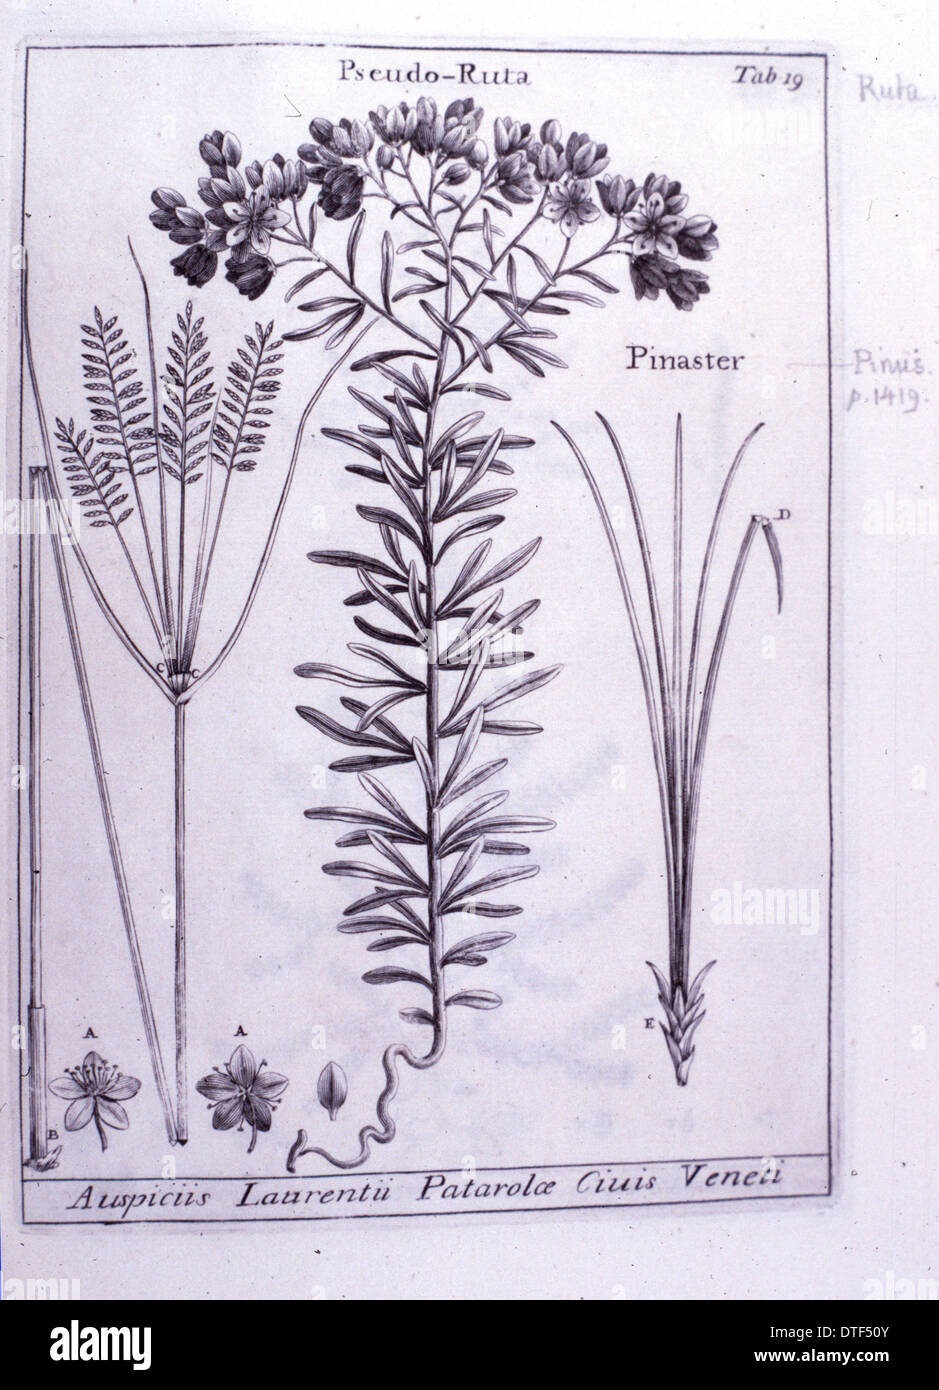 Haplophyllum patavinum, ruta patavina Stock Photo